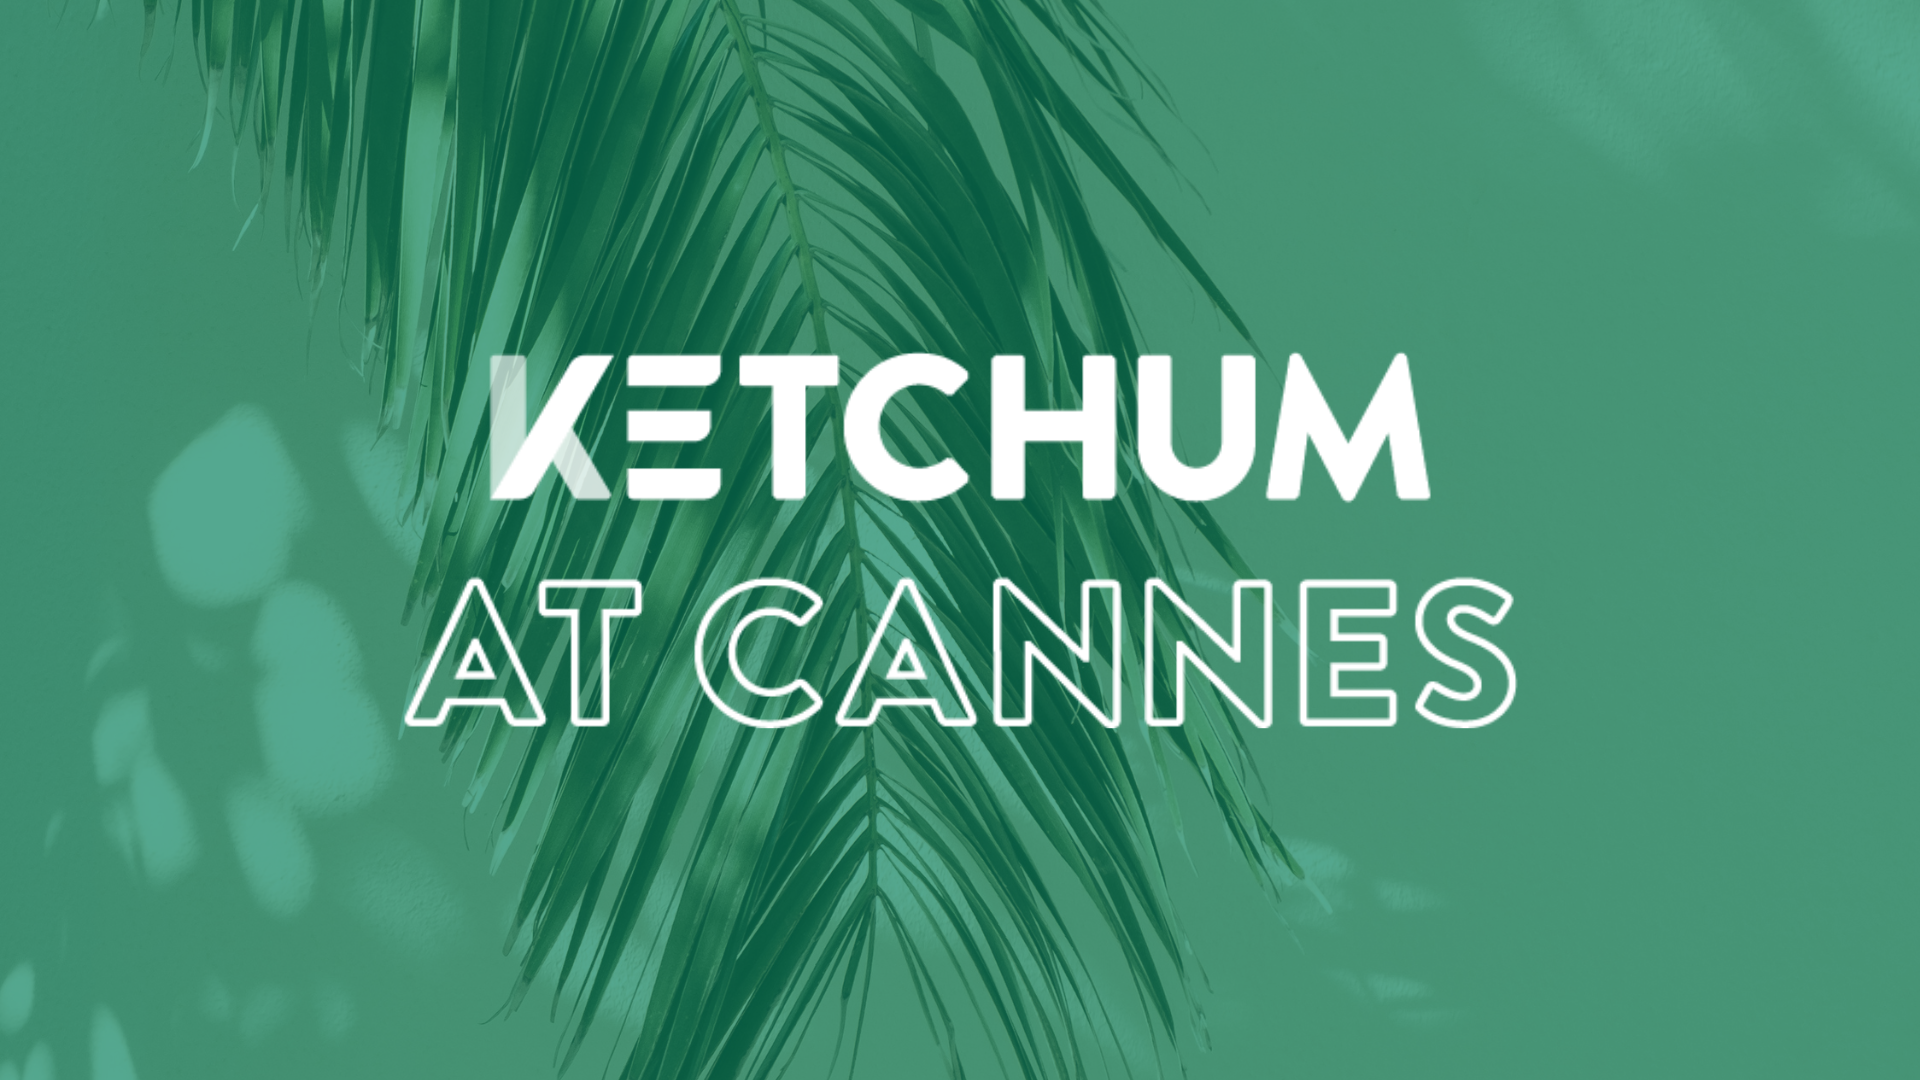 Ketchum at Cannes